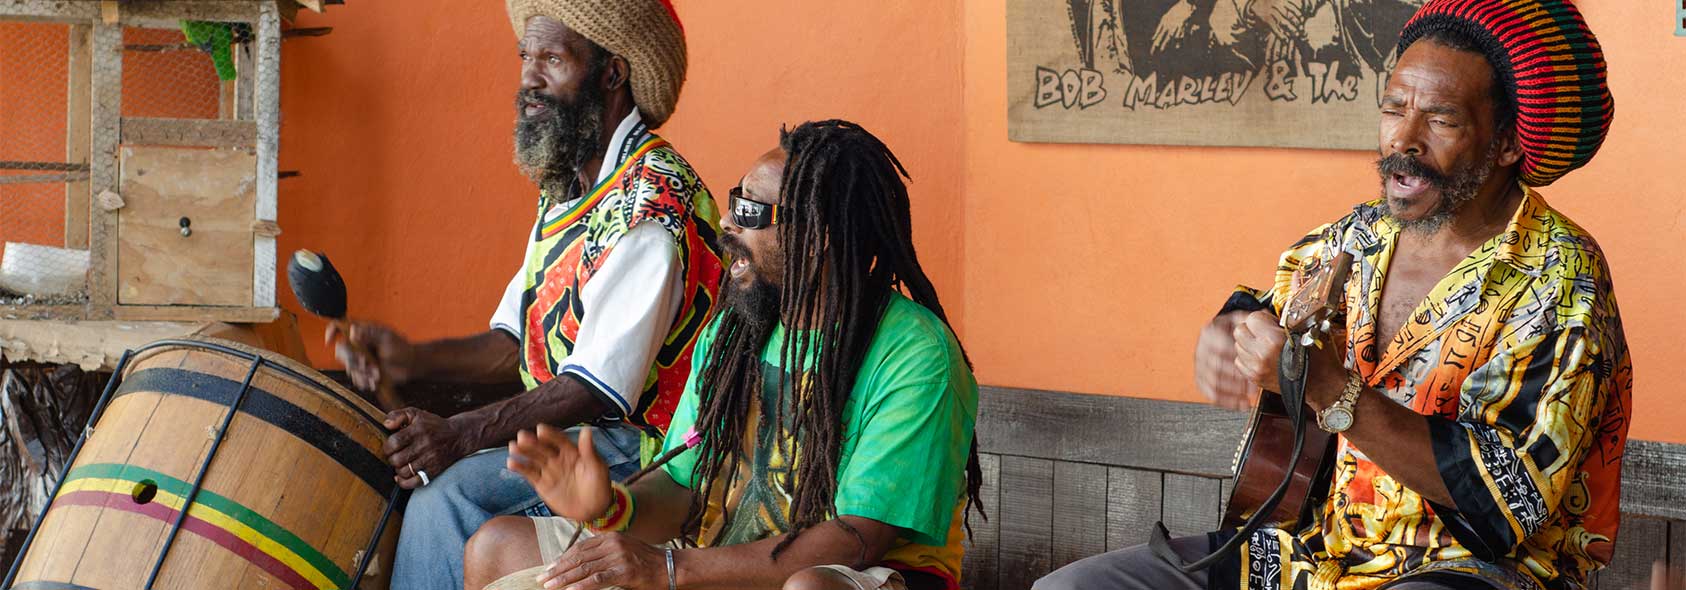 Bob Marley - Spirit of Reggae from Runaway Bay